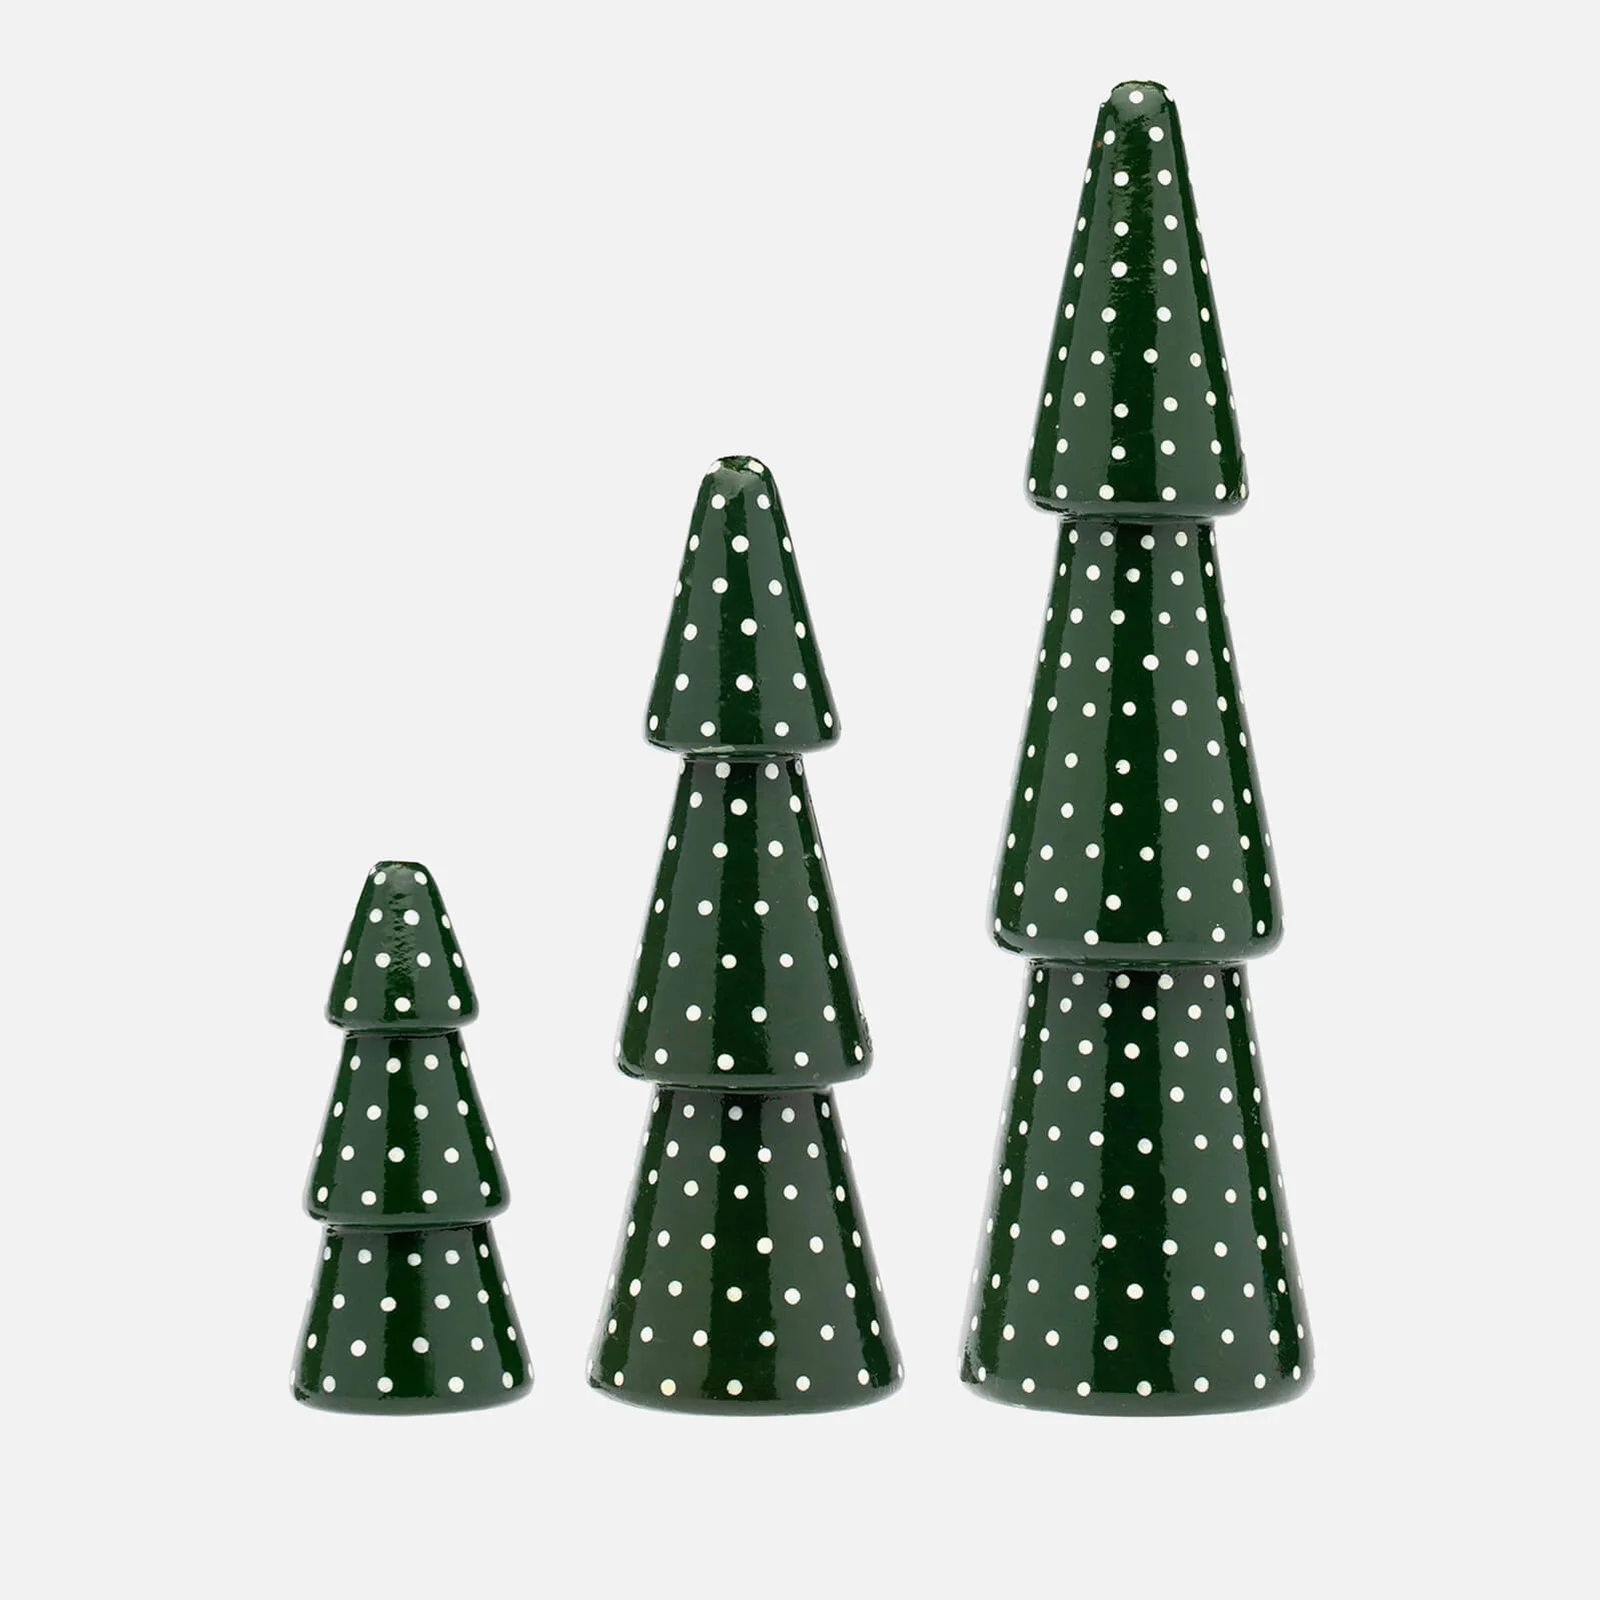 anna + nina Christmas Tree Ornaments - Set of 3 Image 1